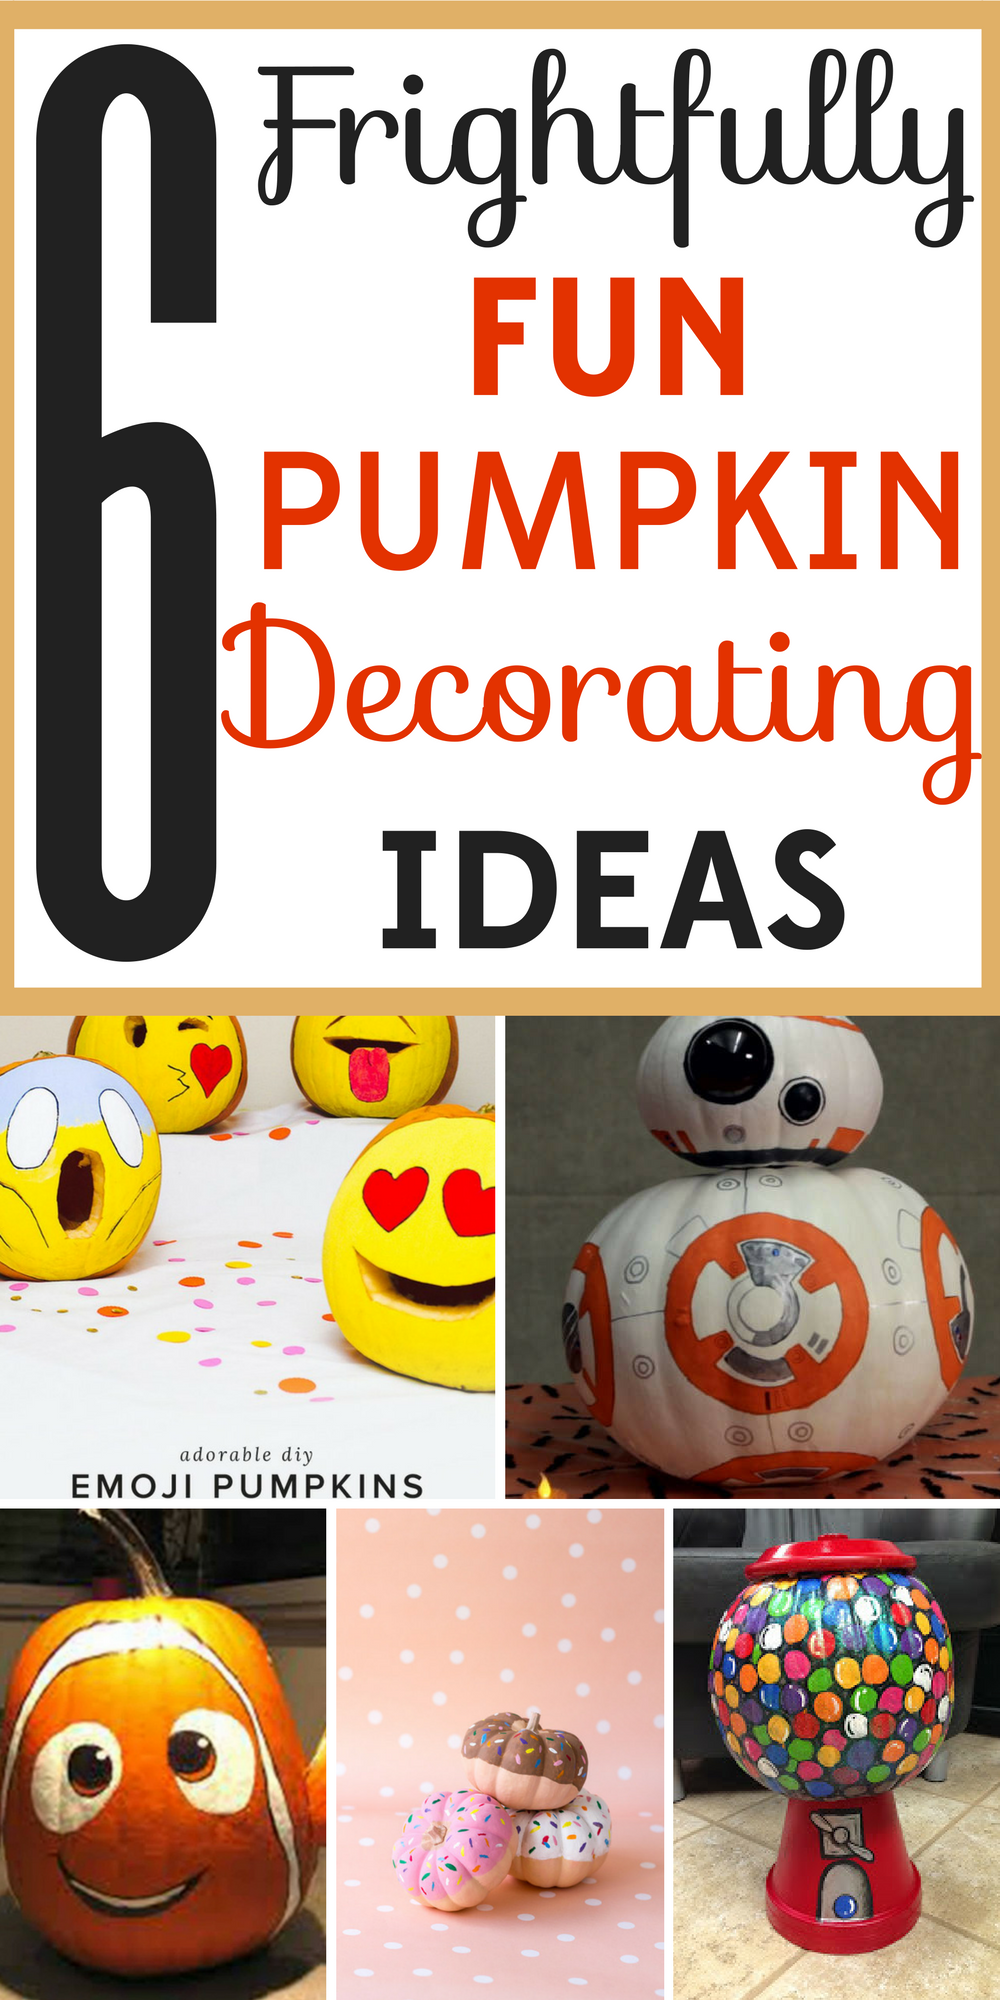 6 Frightfully Fun Halloween Pumpkin Decorating Ideas